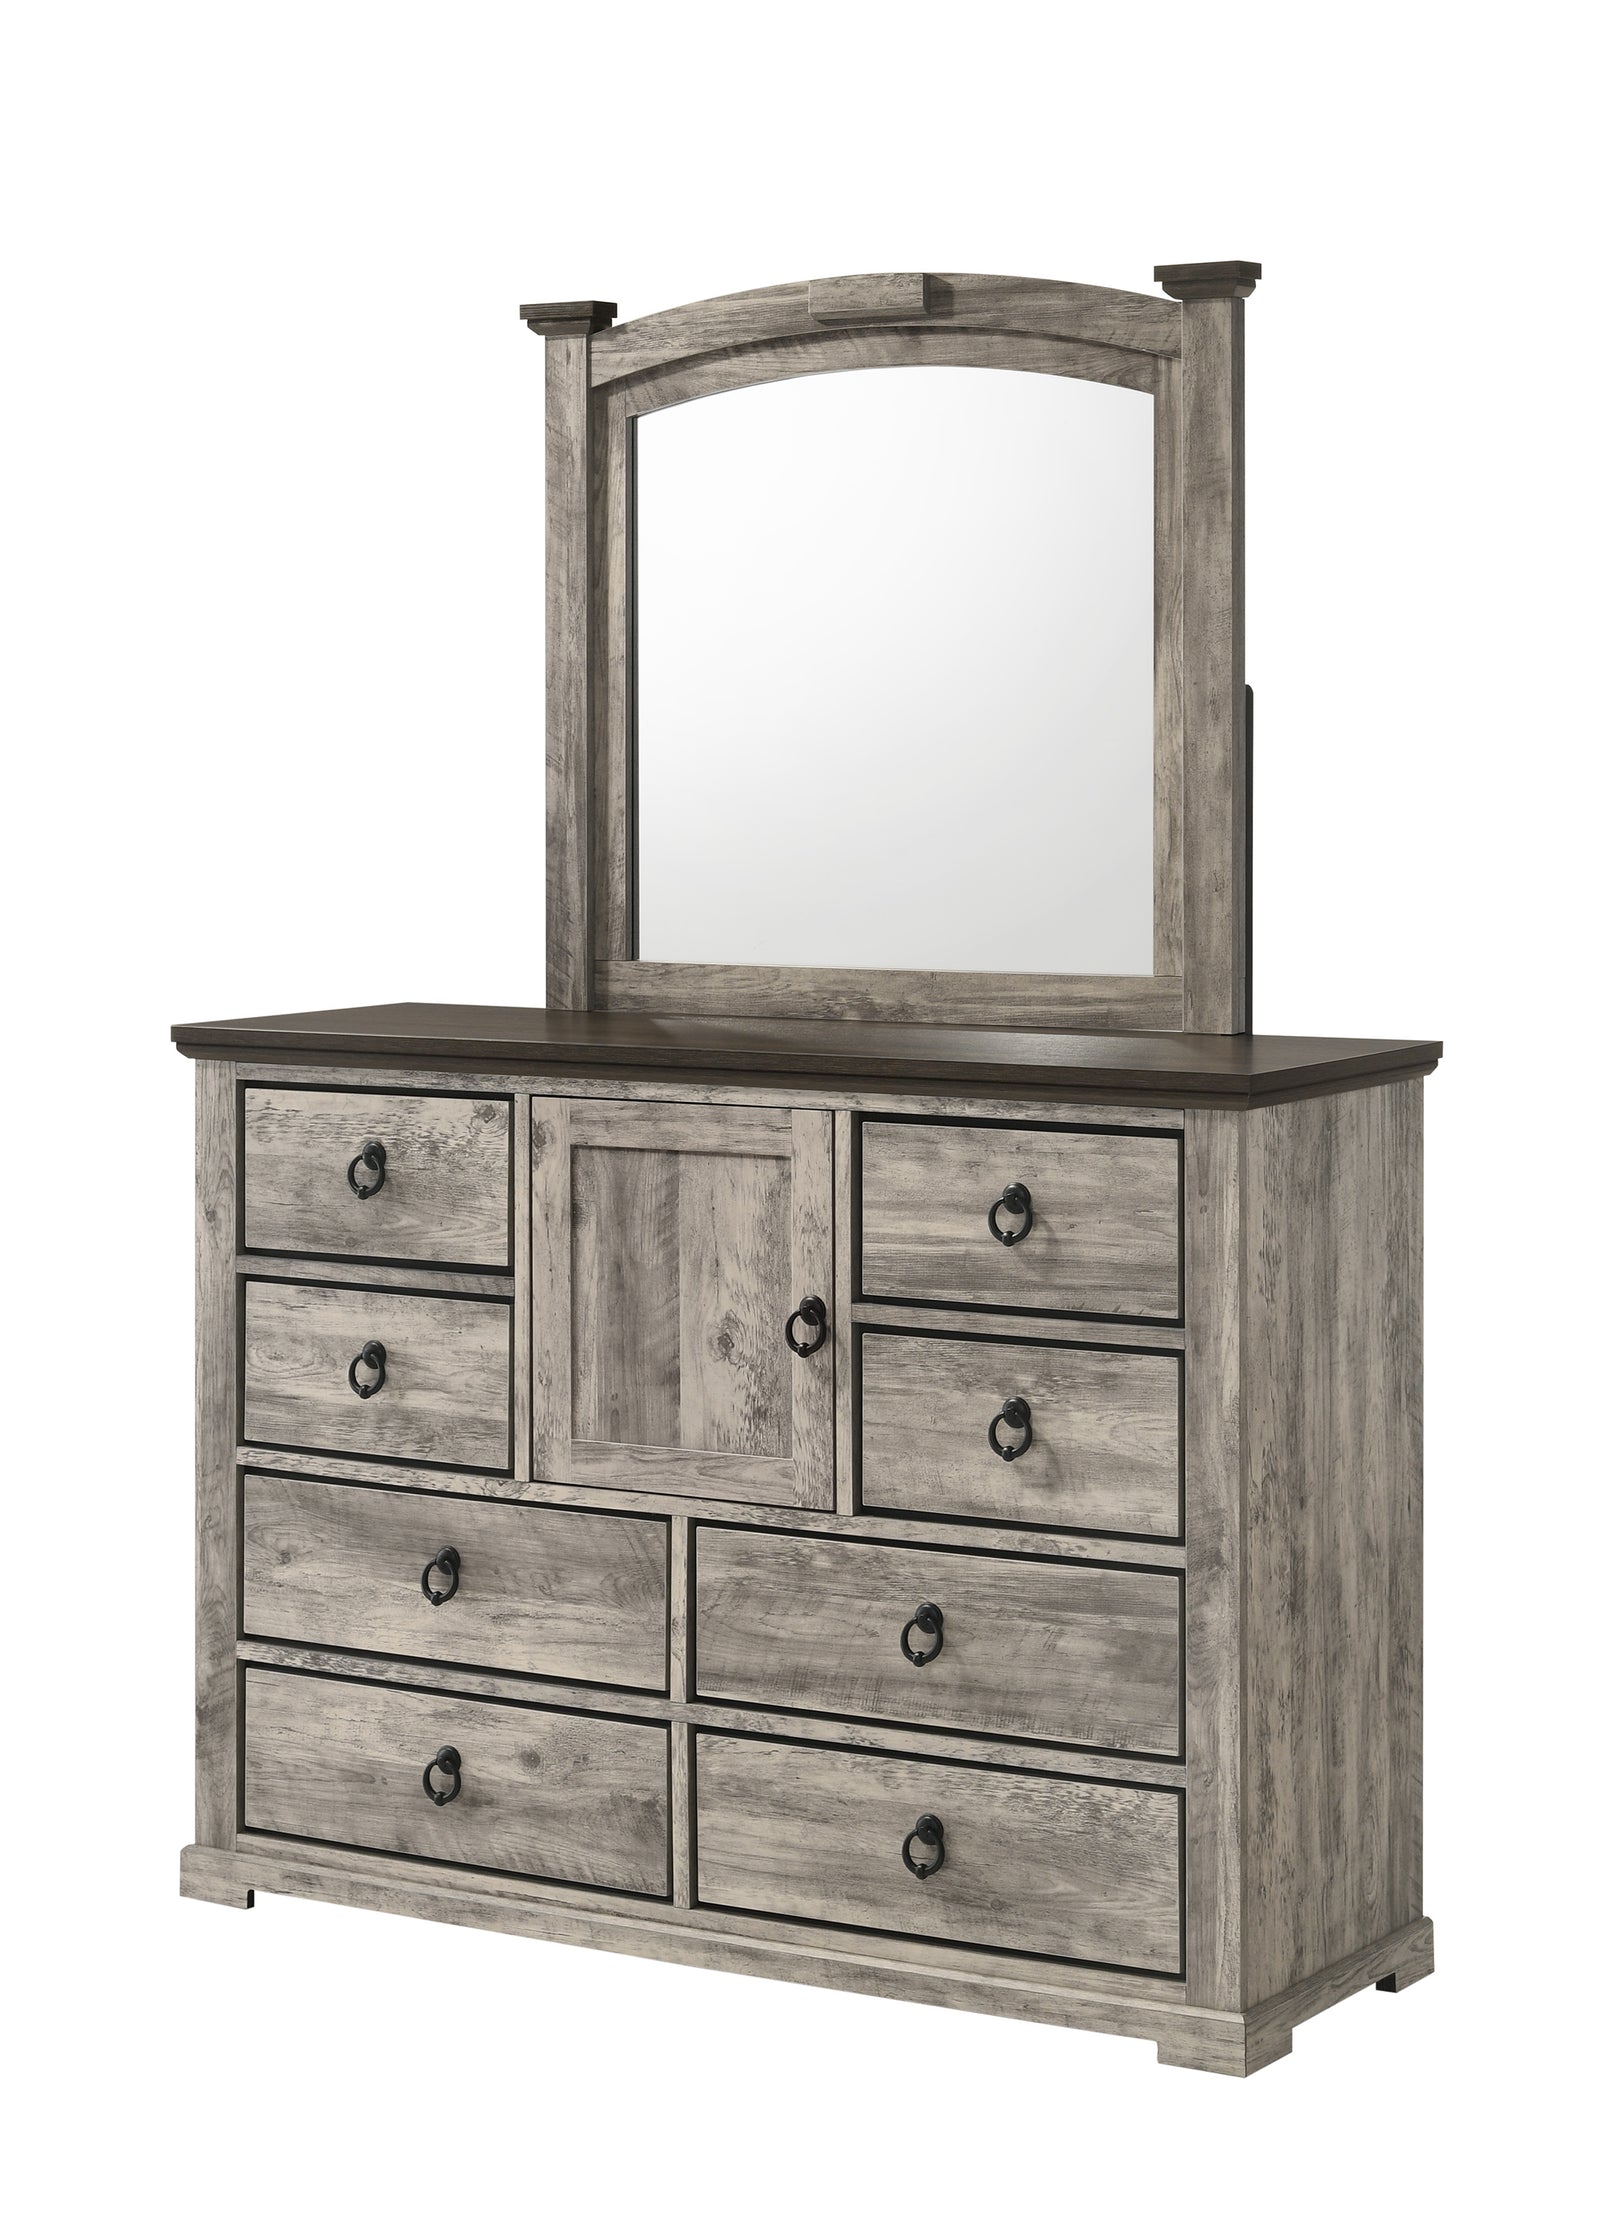 Ella-mae Gray Modern Contemporary Solid Wood And Veneers 9-Drawers Dresser